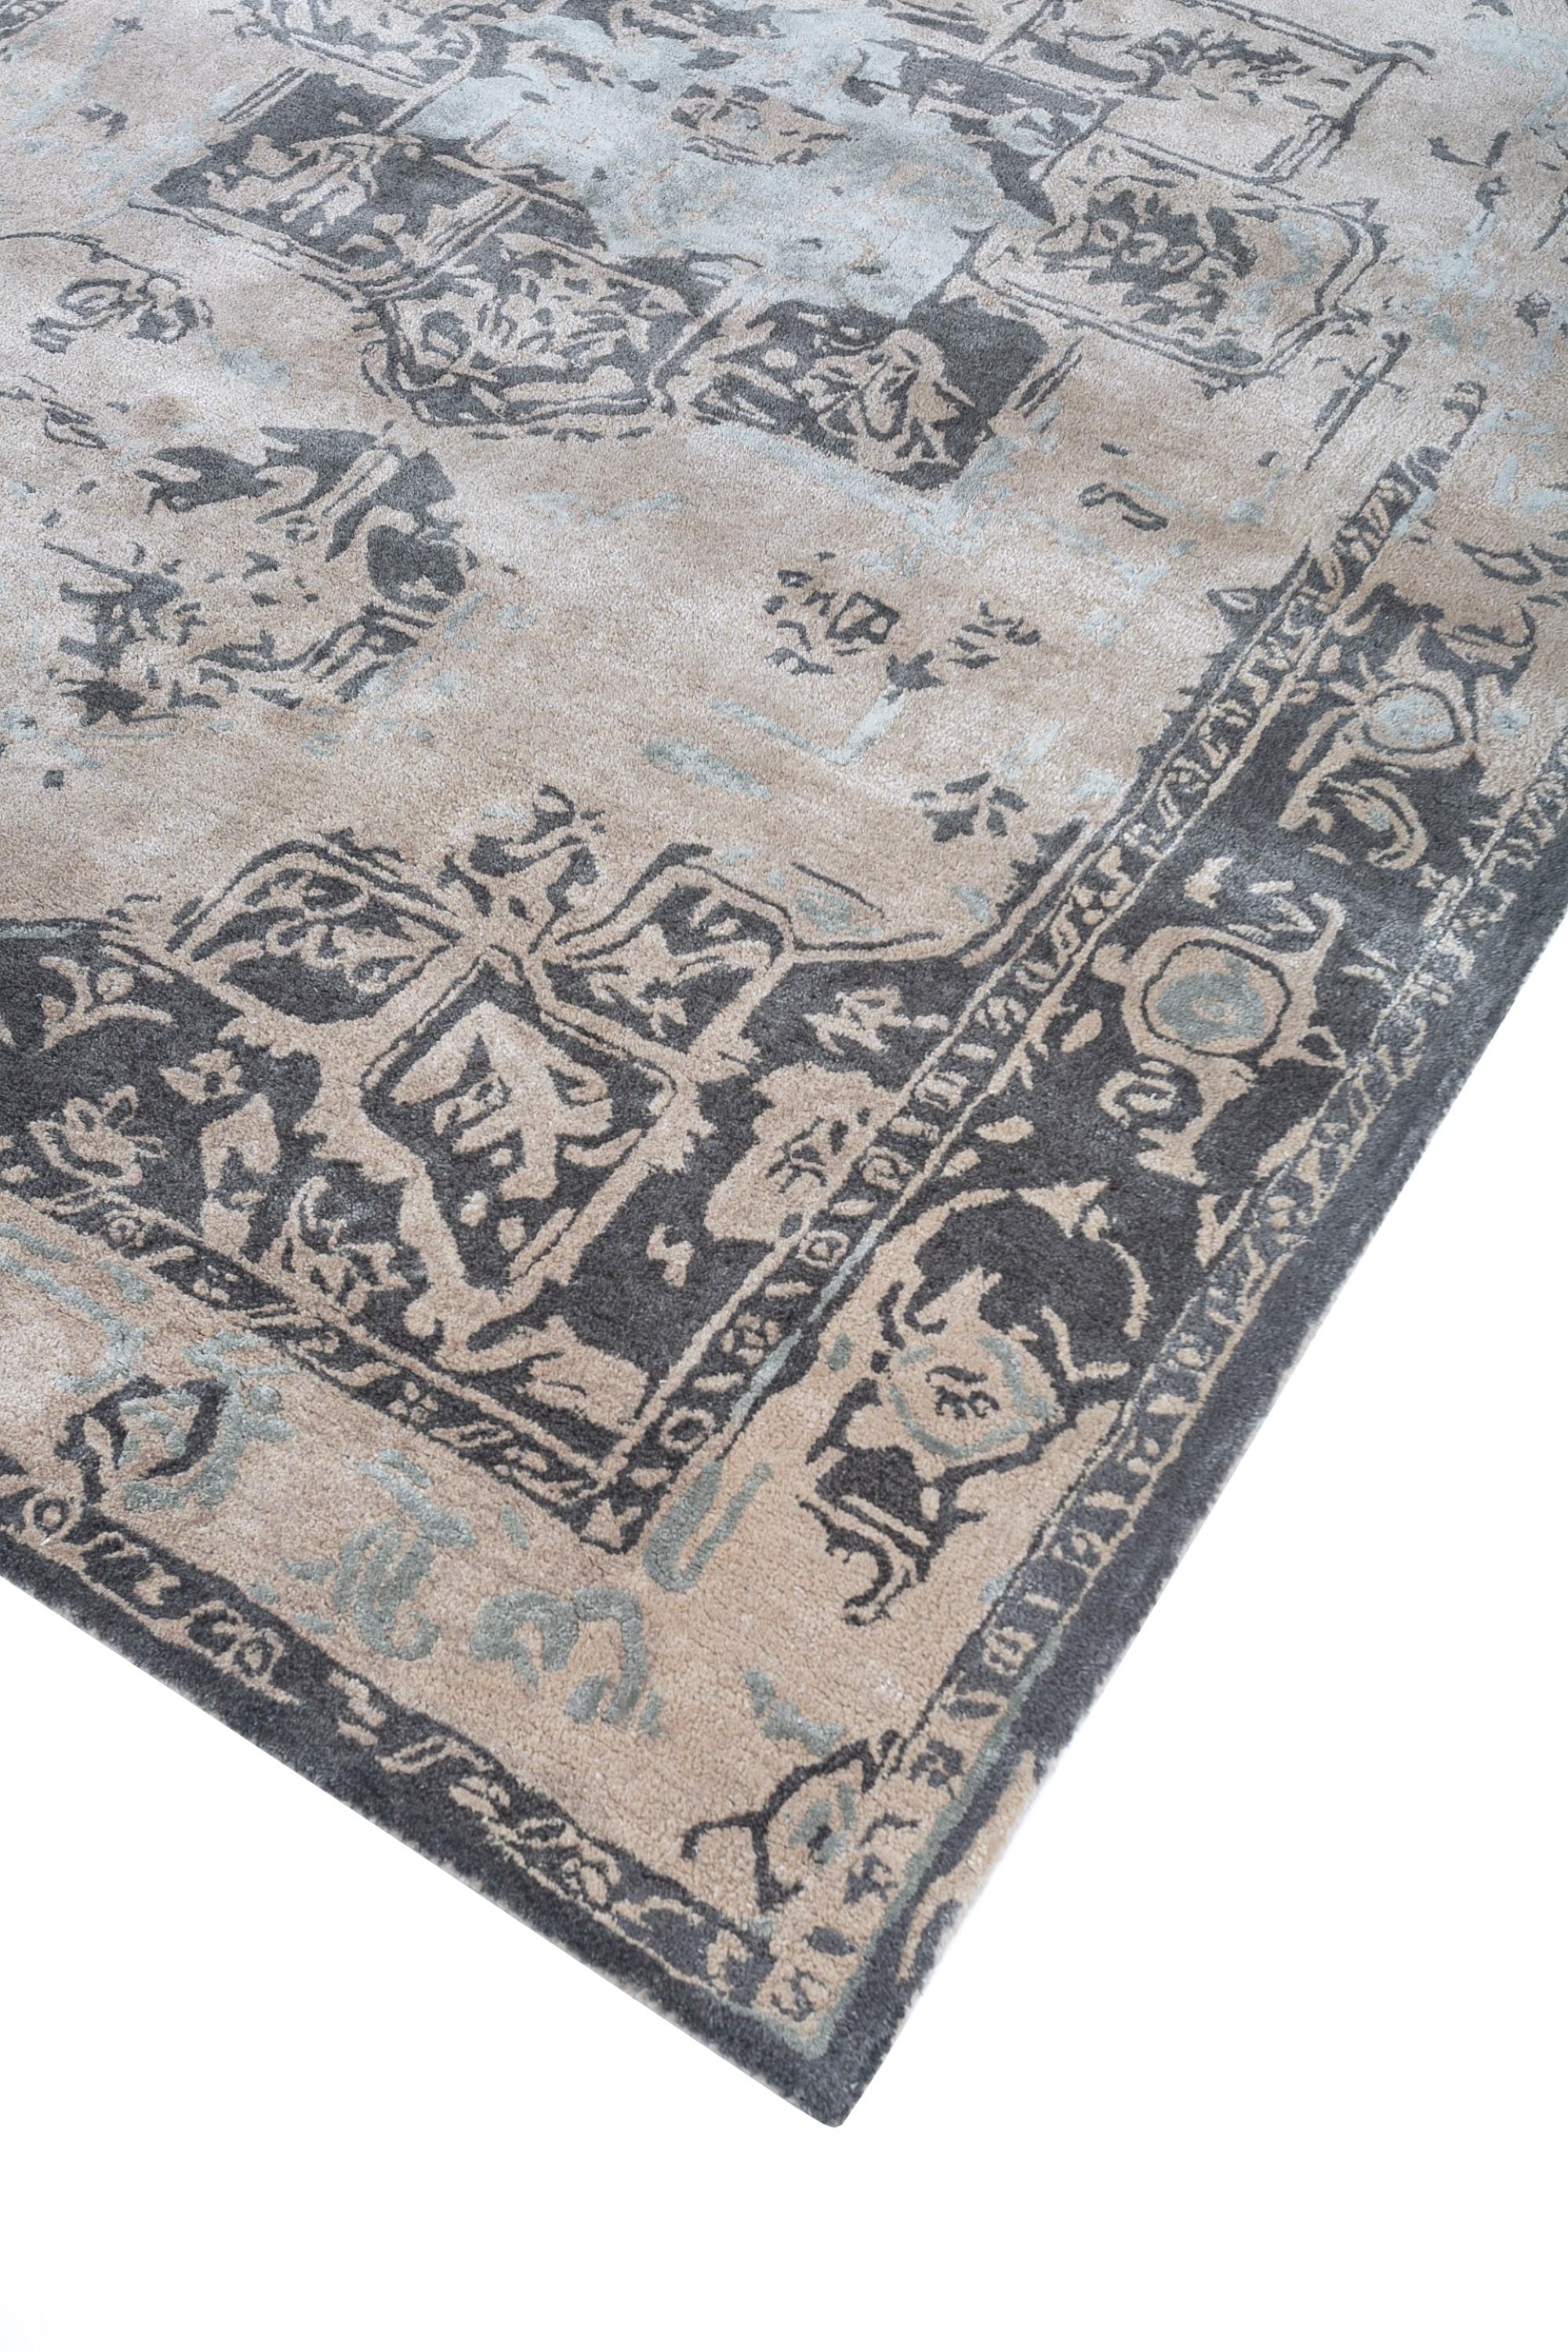 Tibetan Mystique Mingle Italian Straw Charcoal Slate 180x270 cm Hand Tufted Rug For Sale